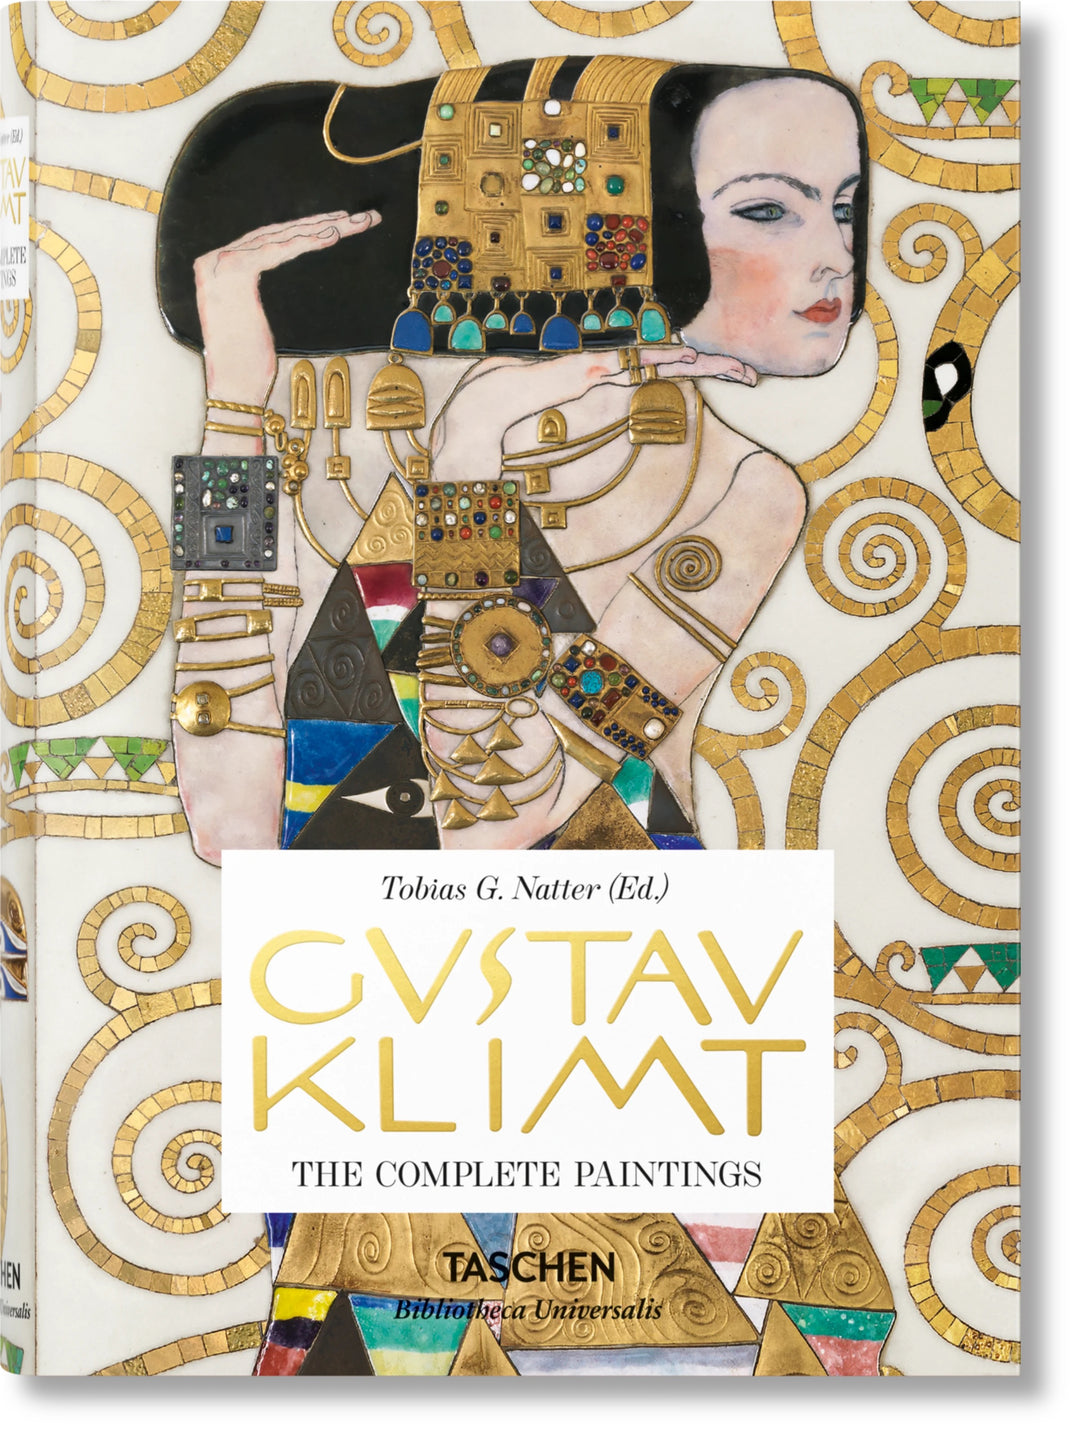 Gustav Klimt: the complete paintings book